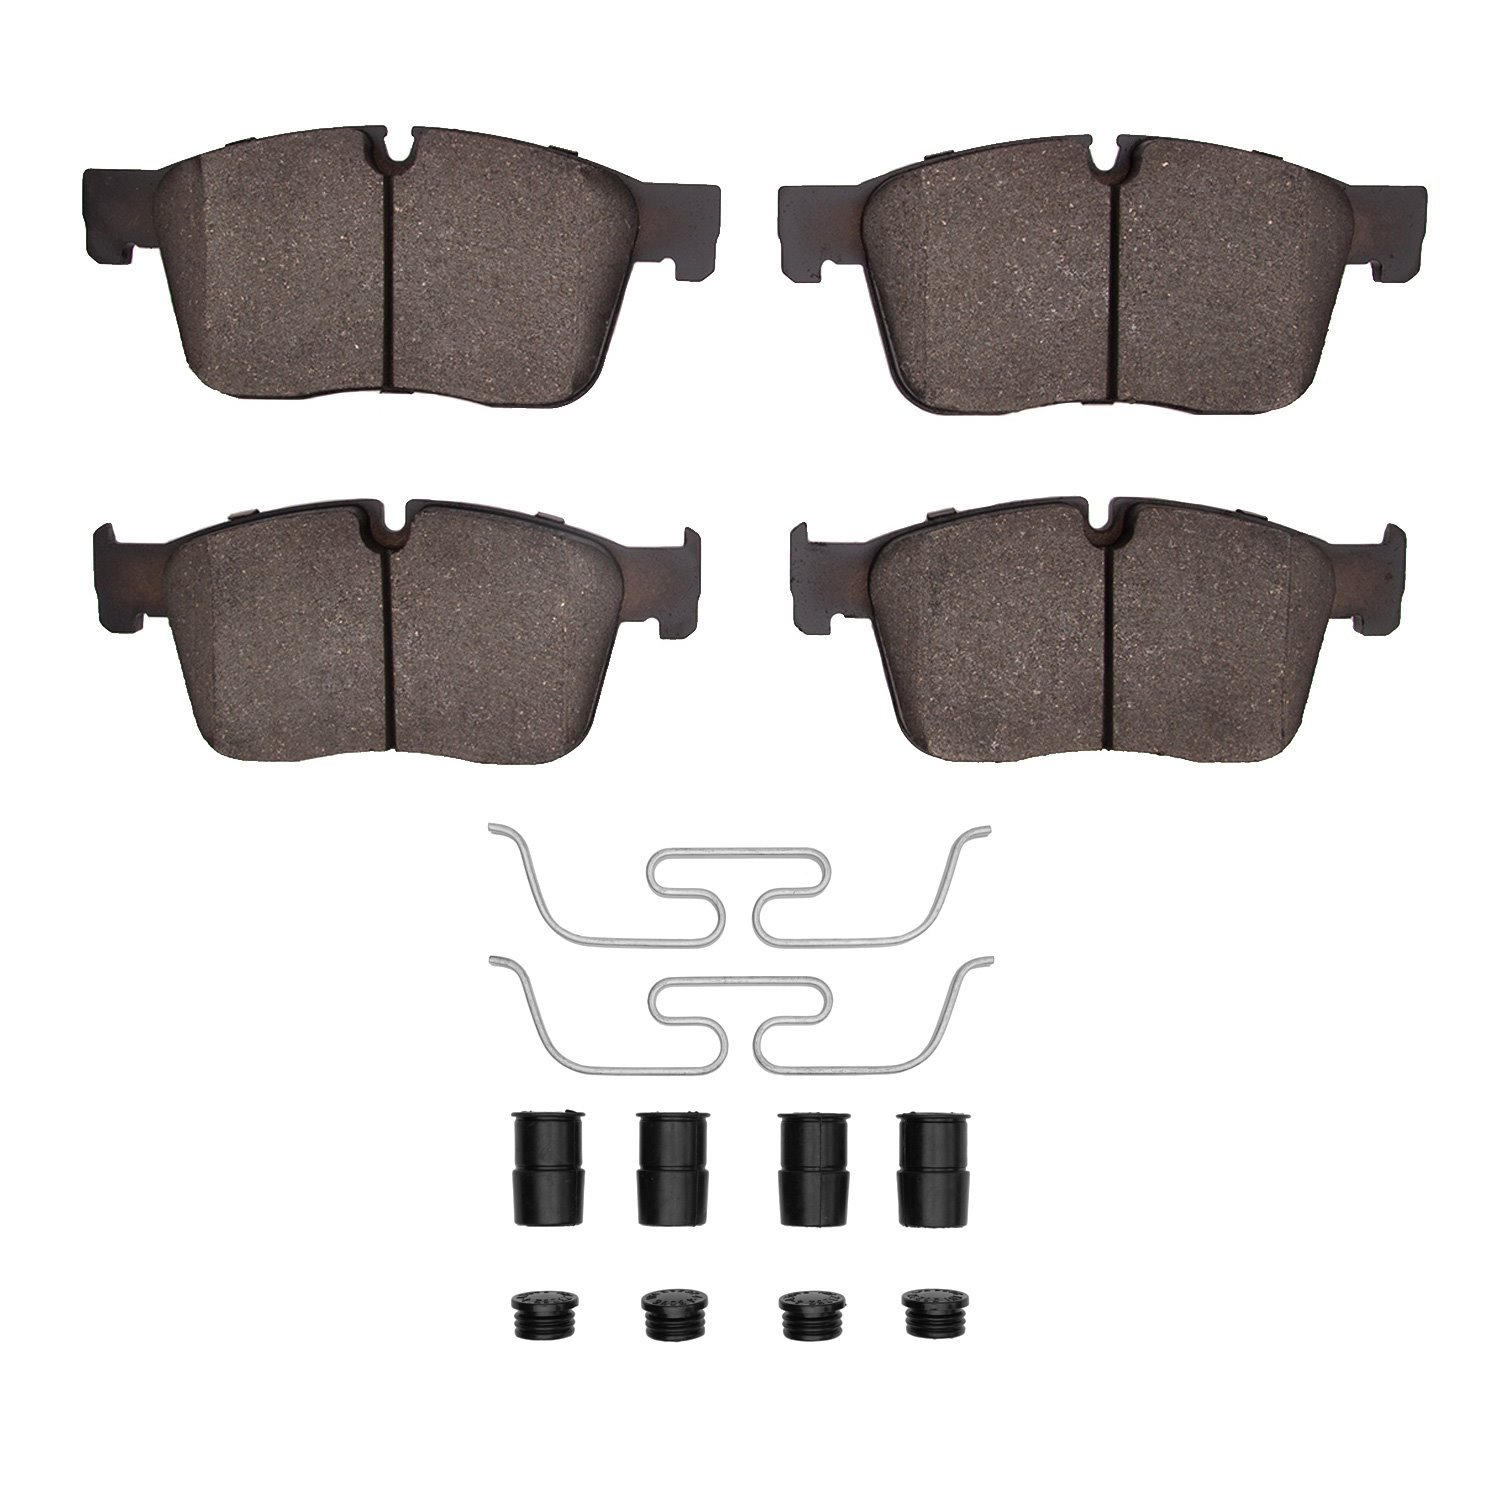 1551-1861-01 5000 Advanced Ceramic Brake Pads & Hardware Kit, Fits Select Multiple Makes/Models, Position: Front